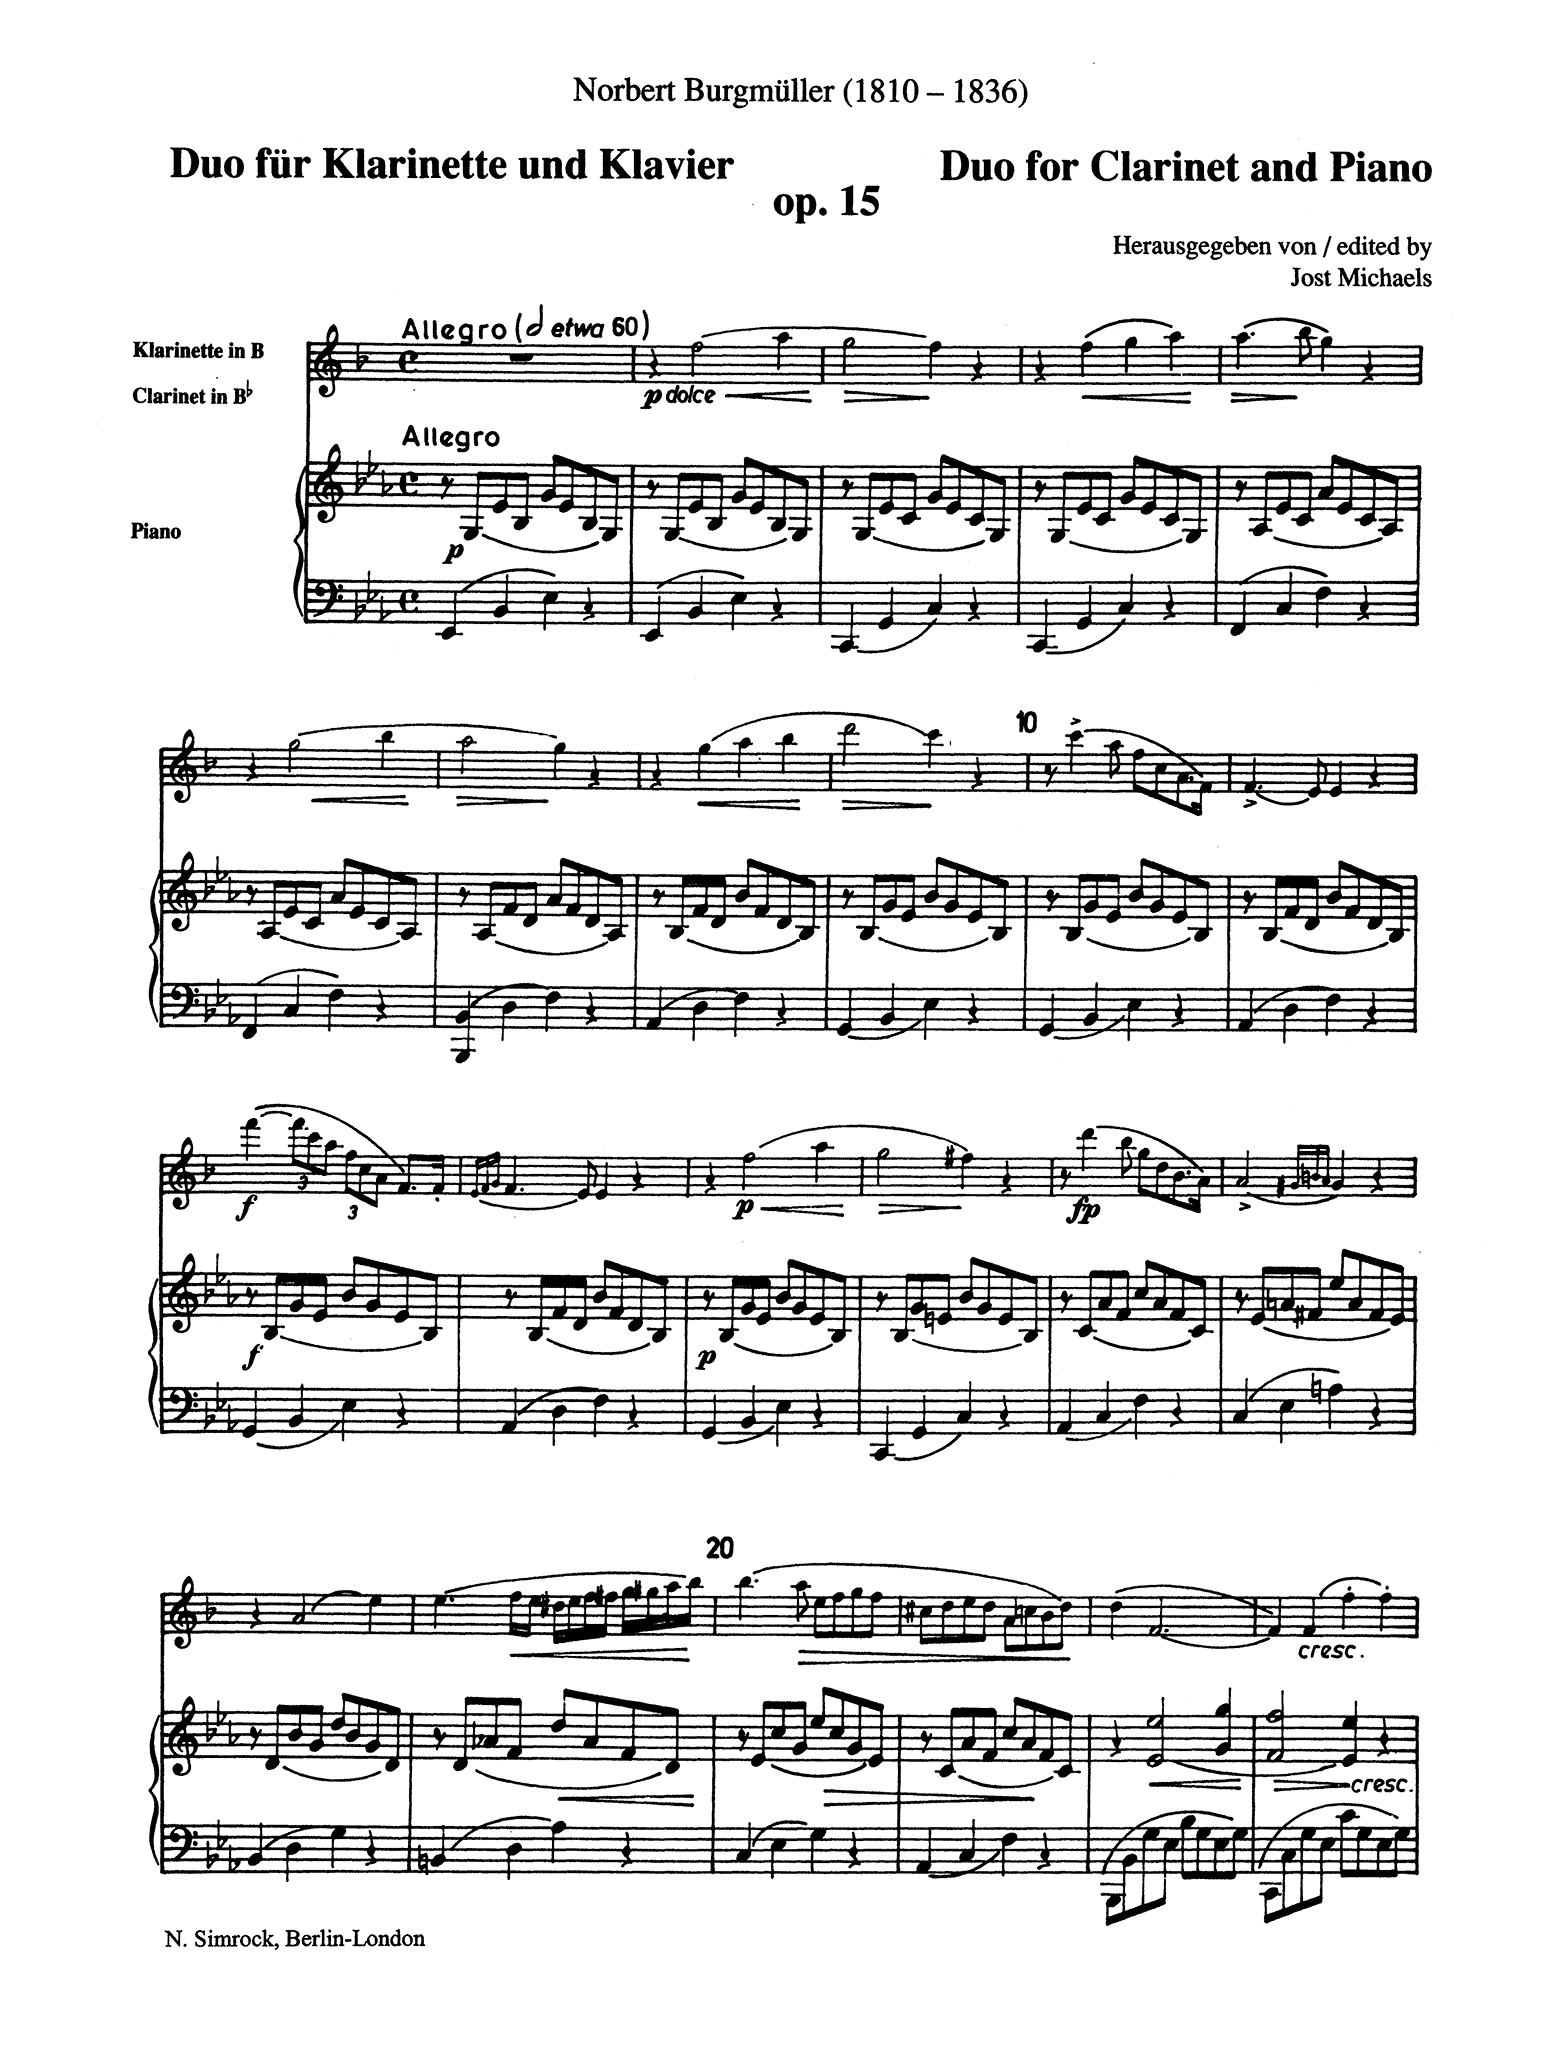 Duo in E-flat Major, Op. 15 - Movement 1